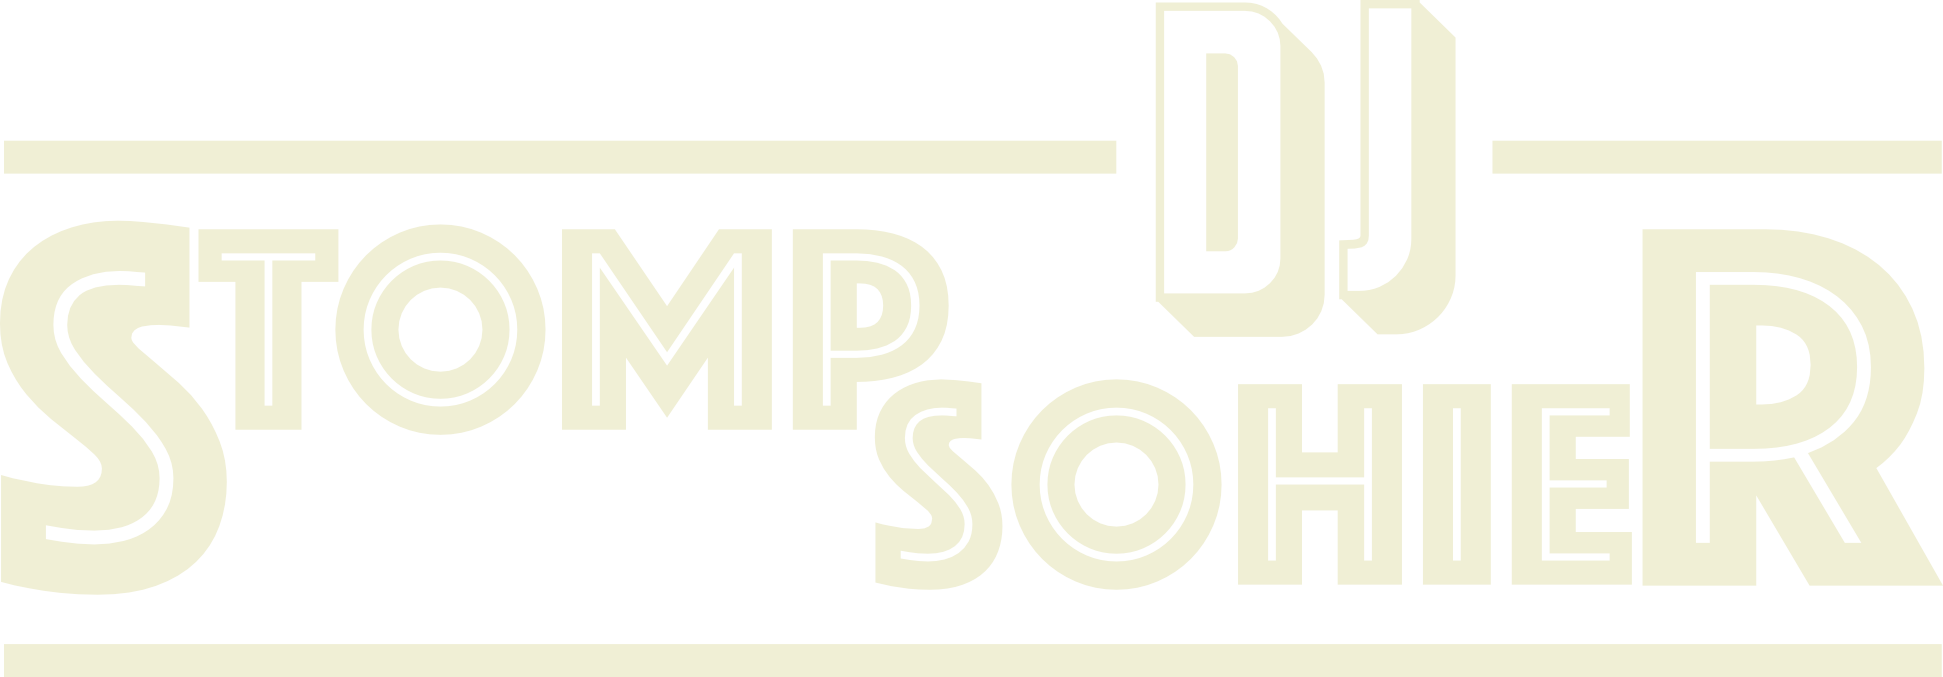 DJ Stomp Sohier